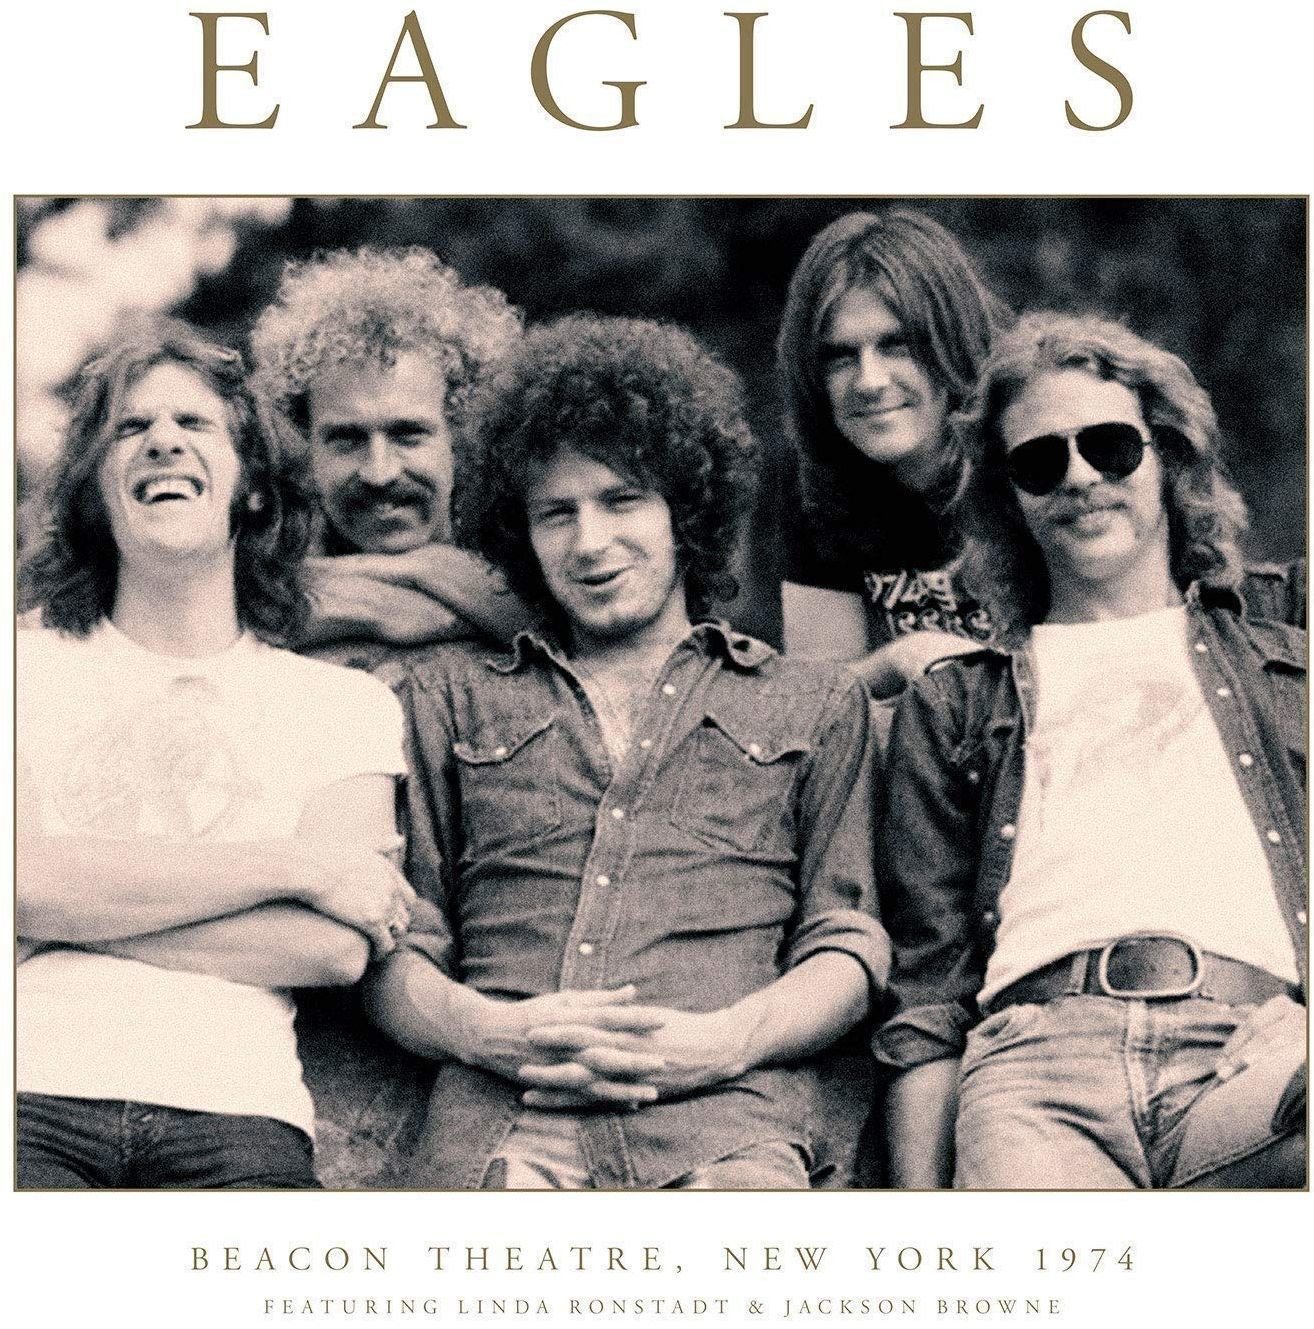 Eagles - Beacon Theatre